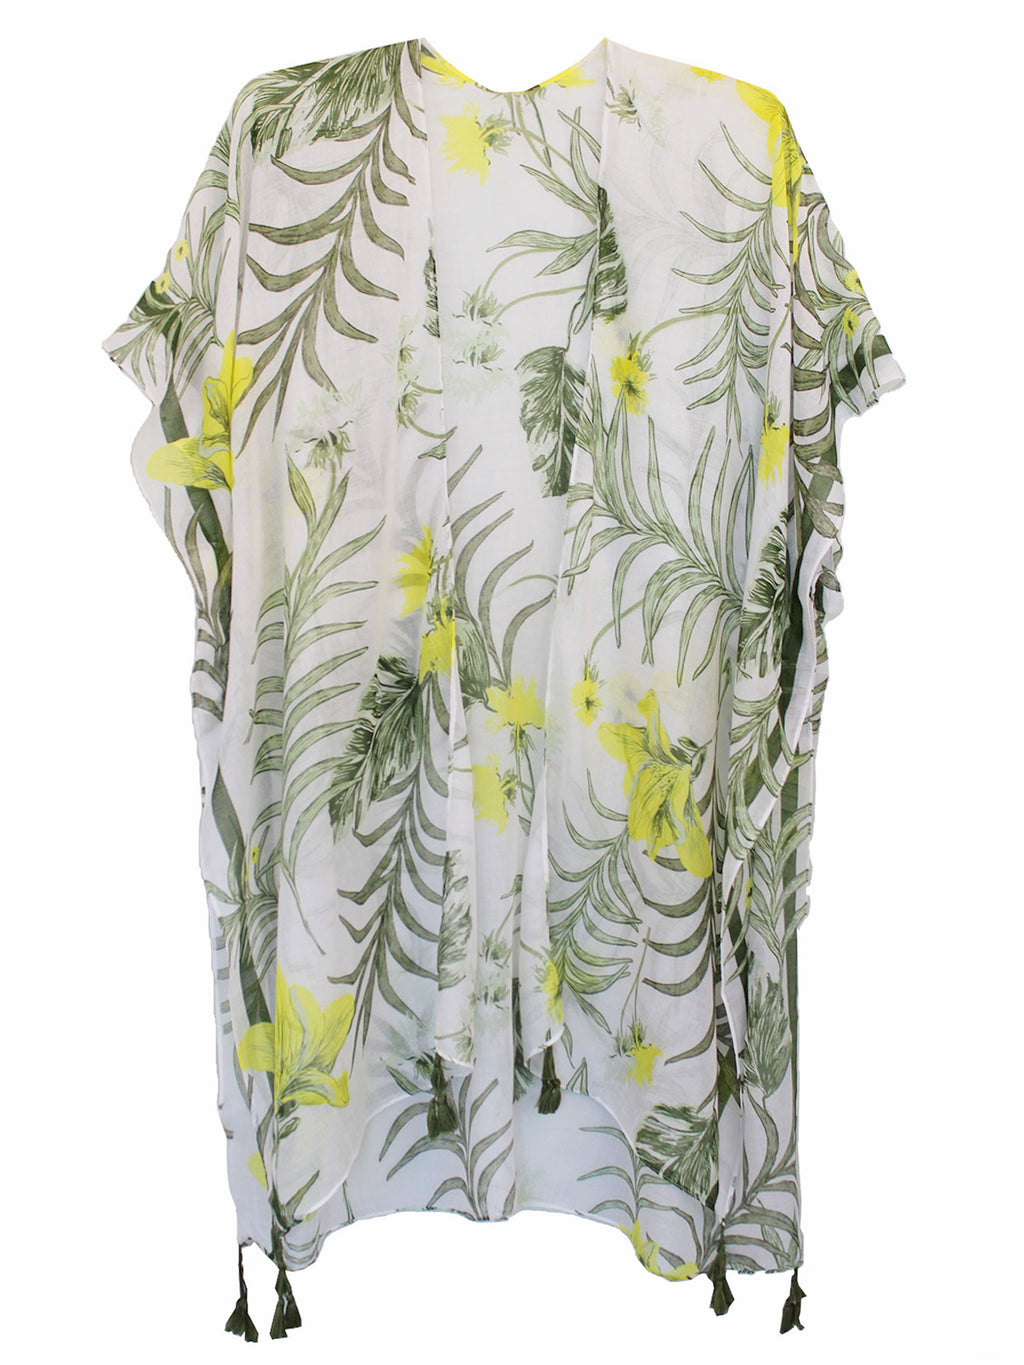 Green & Yellow Tropical Palms Print Kimono Style Beach Cover Up